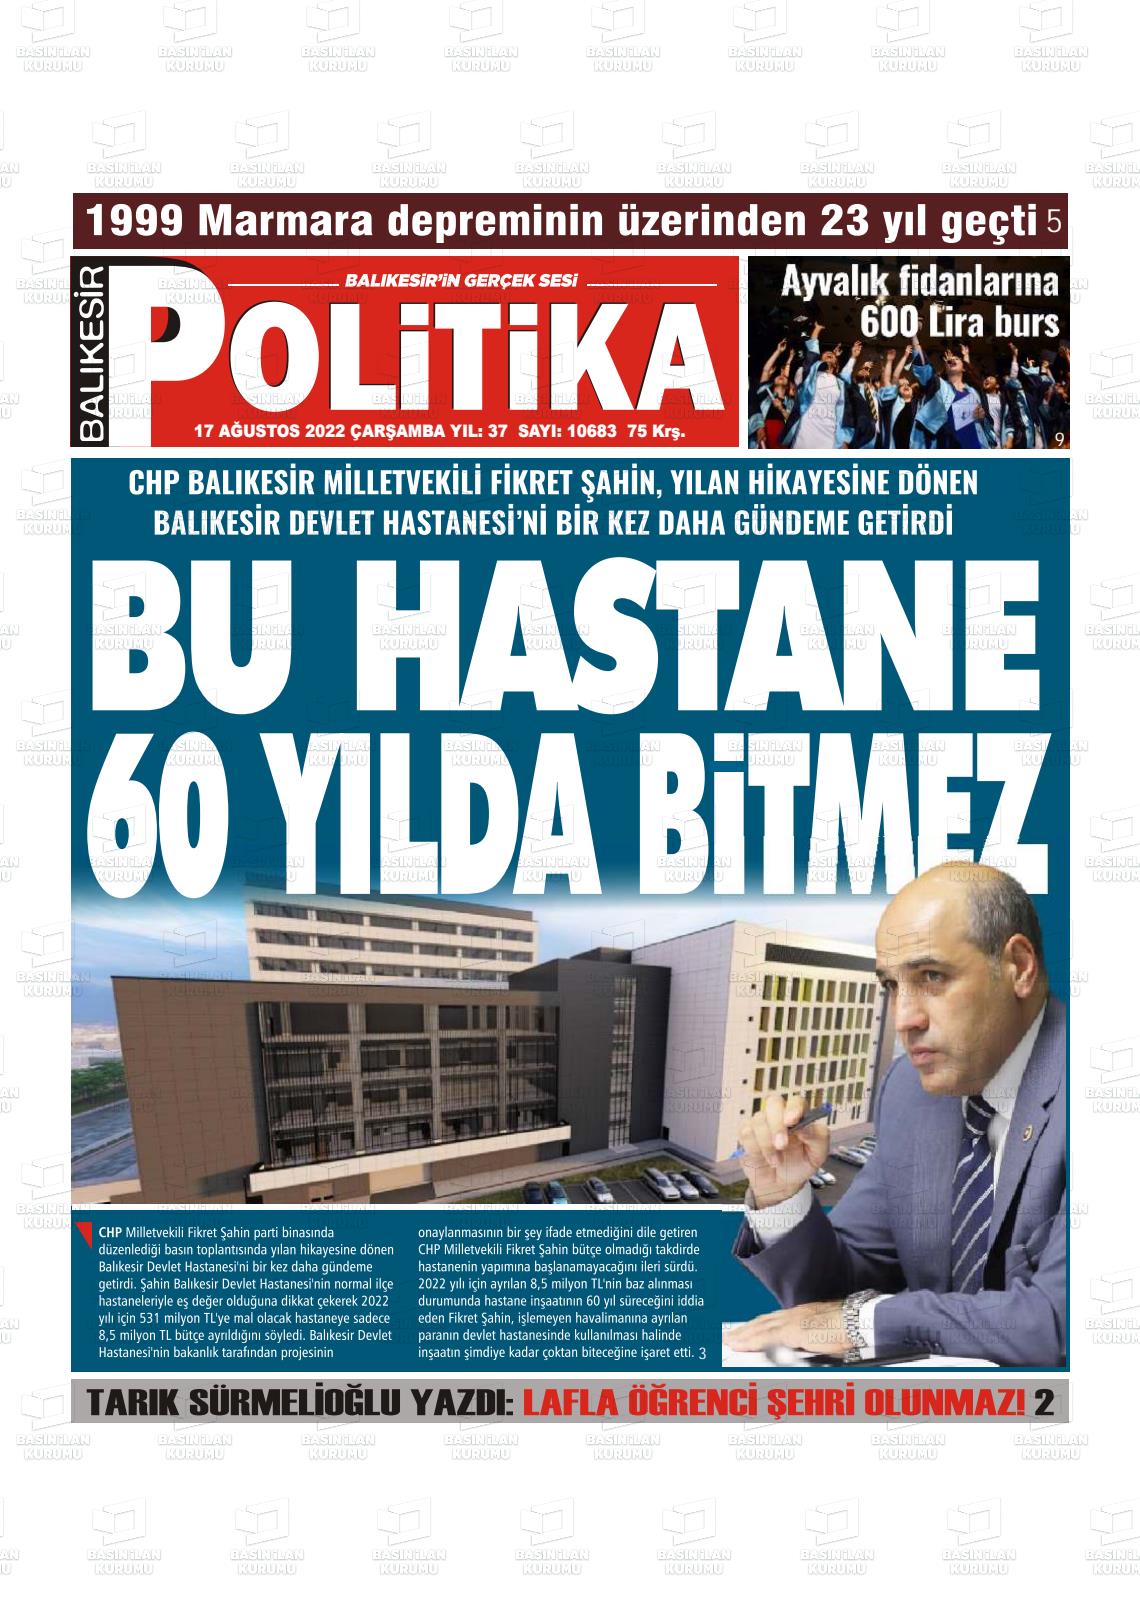 17 Ağustos 2022 Balıkesir Politika Gazete Manşeti